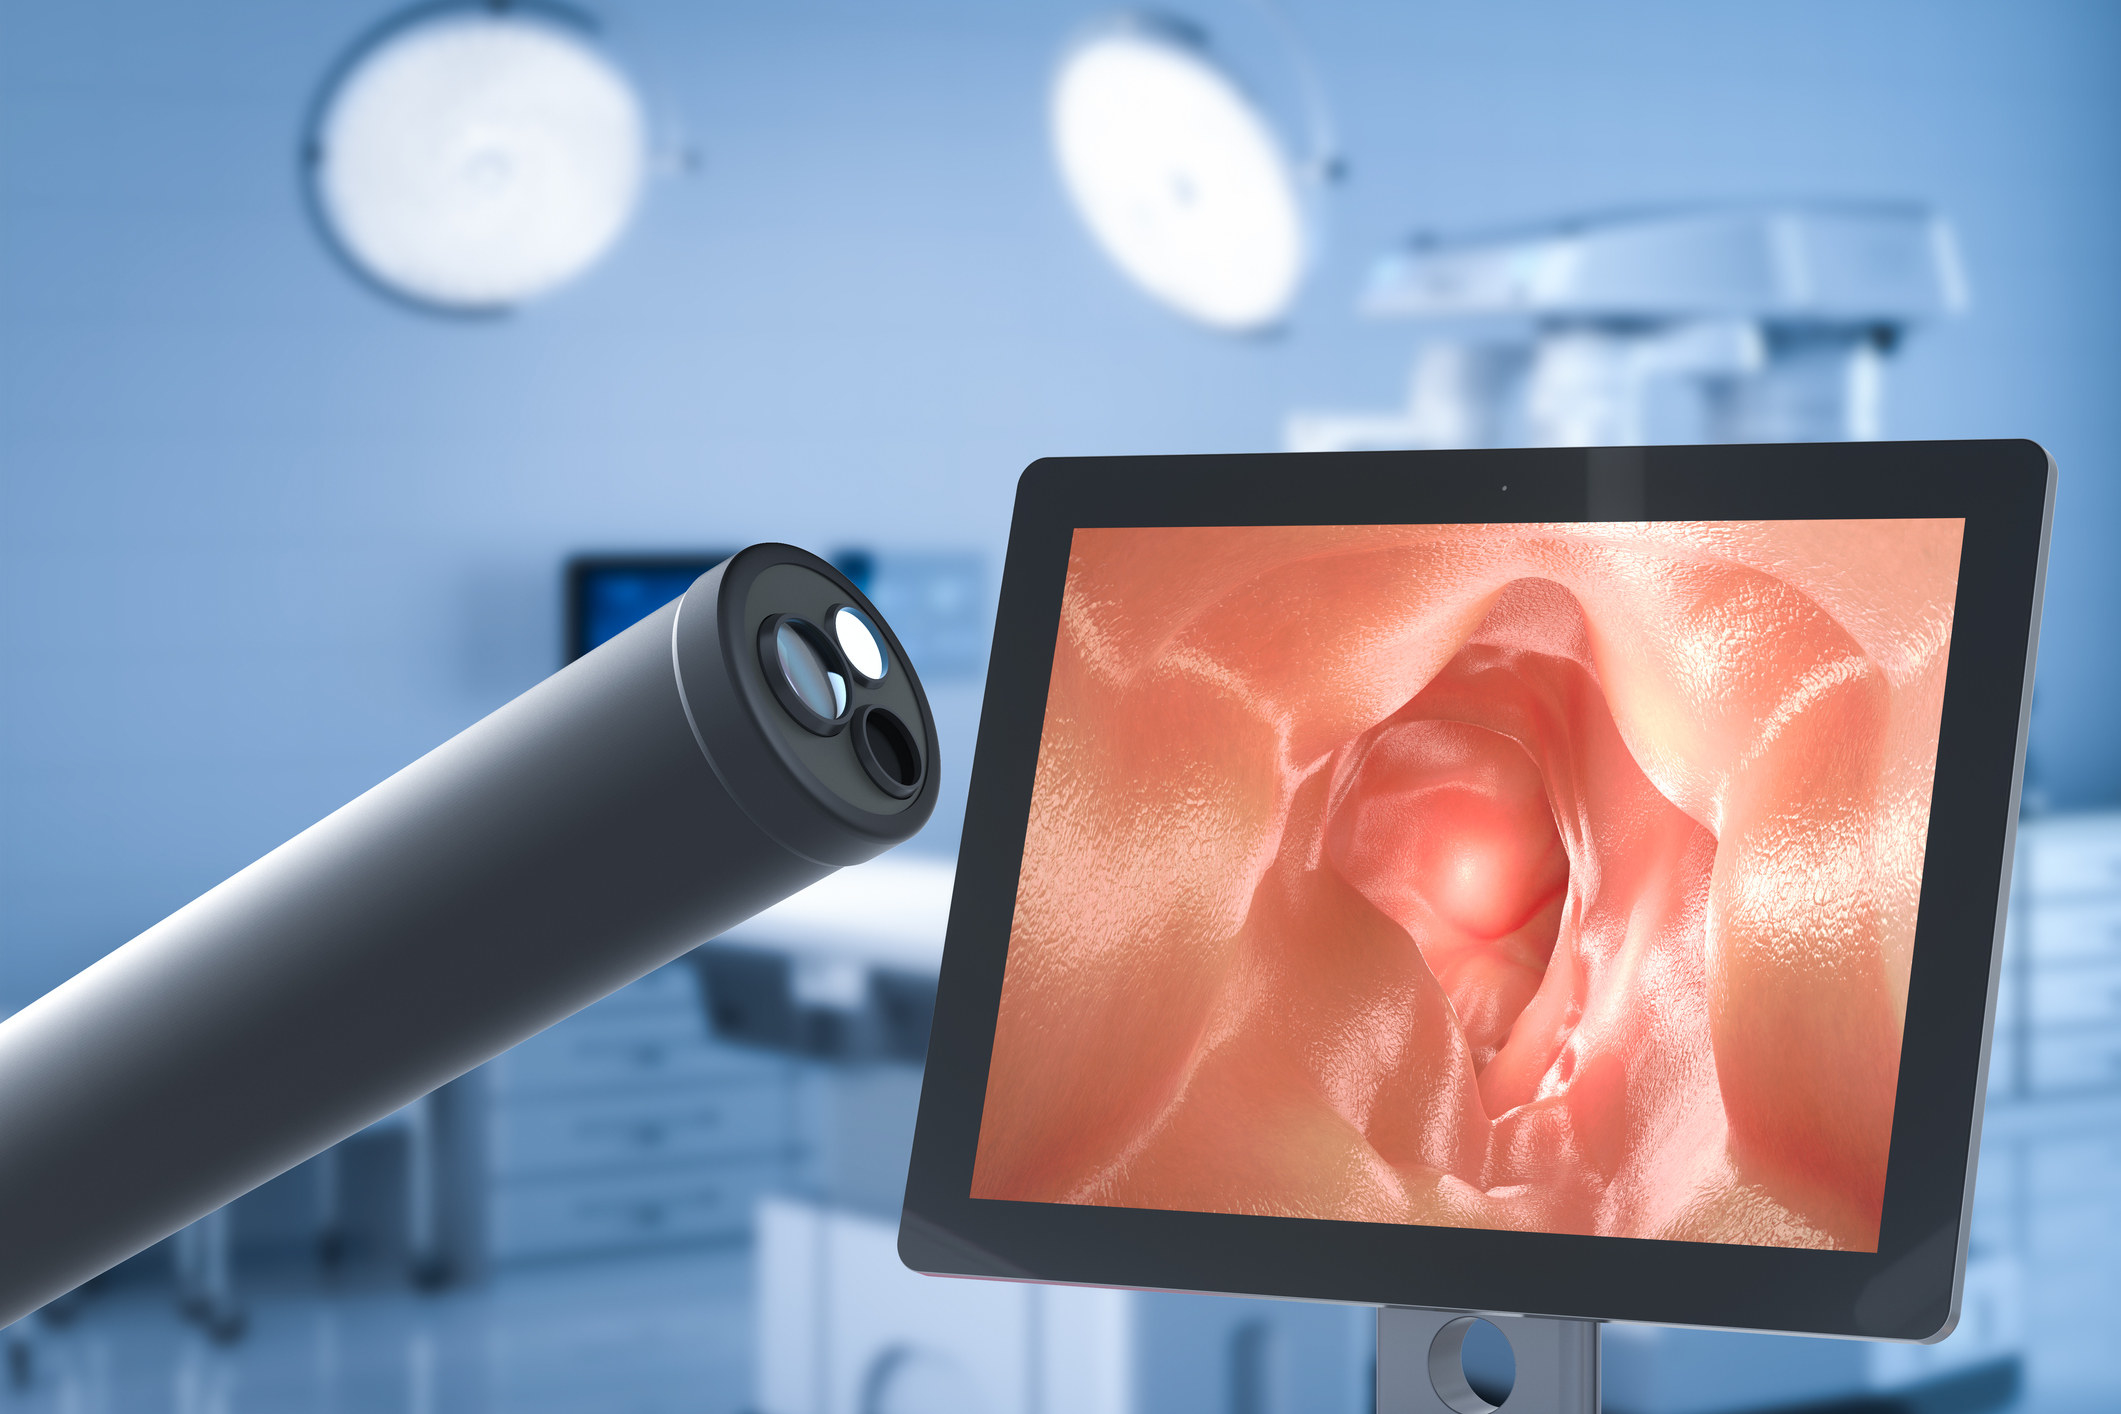 A screen and image machine for a colonoscopy